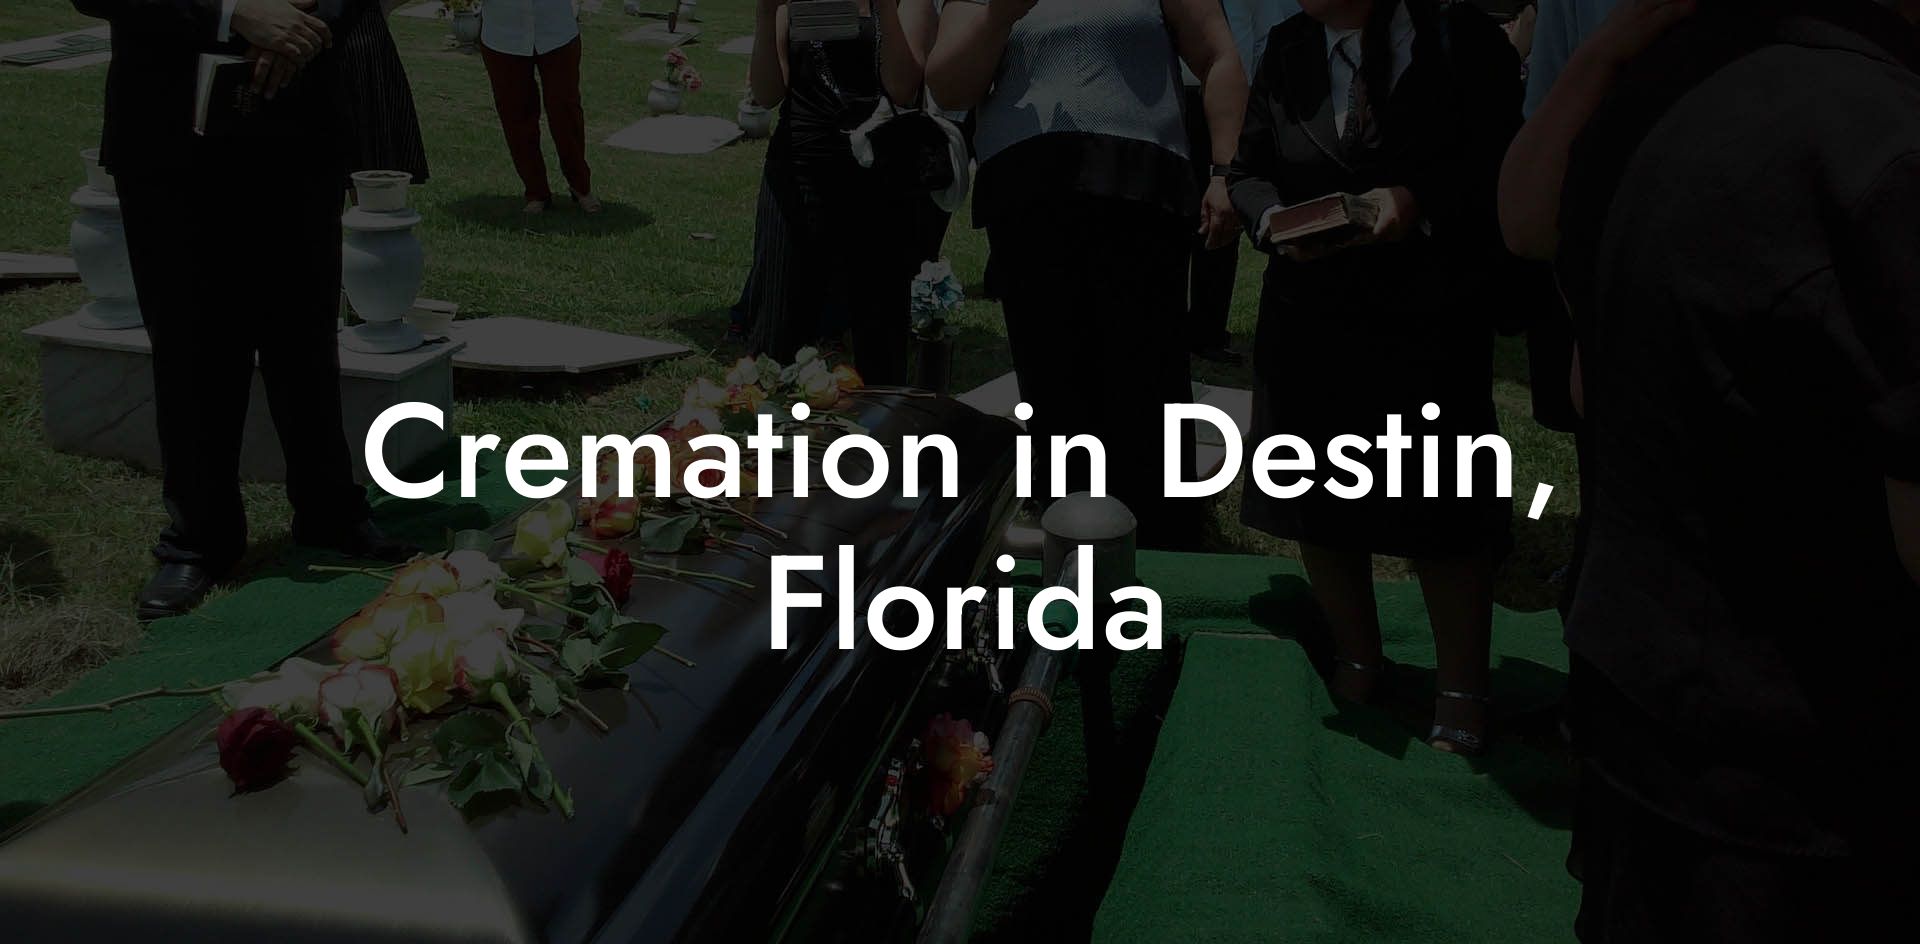 Cremation in Destin, Florida